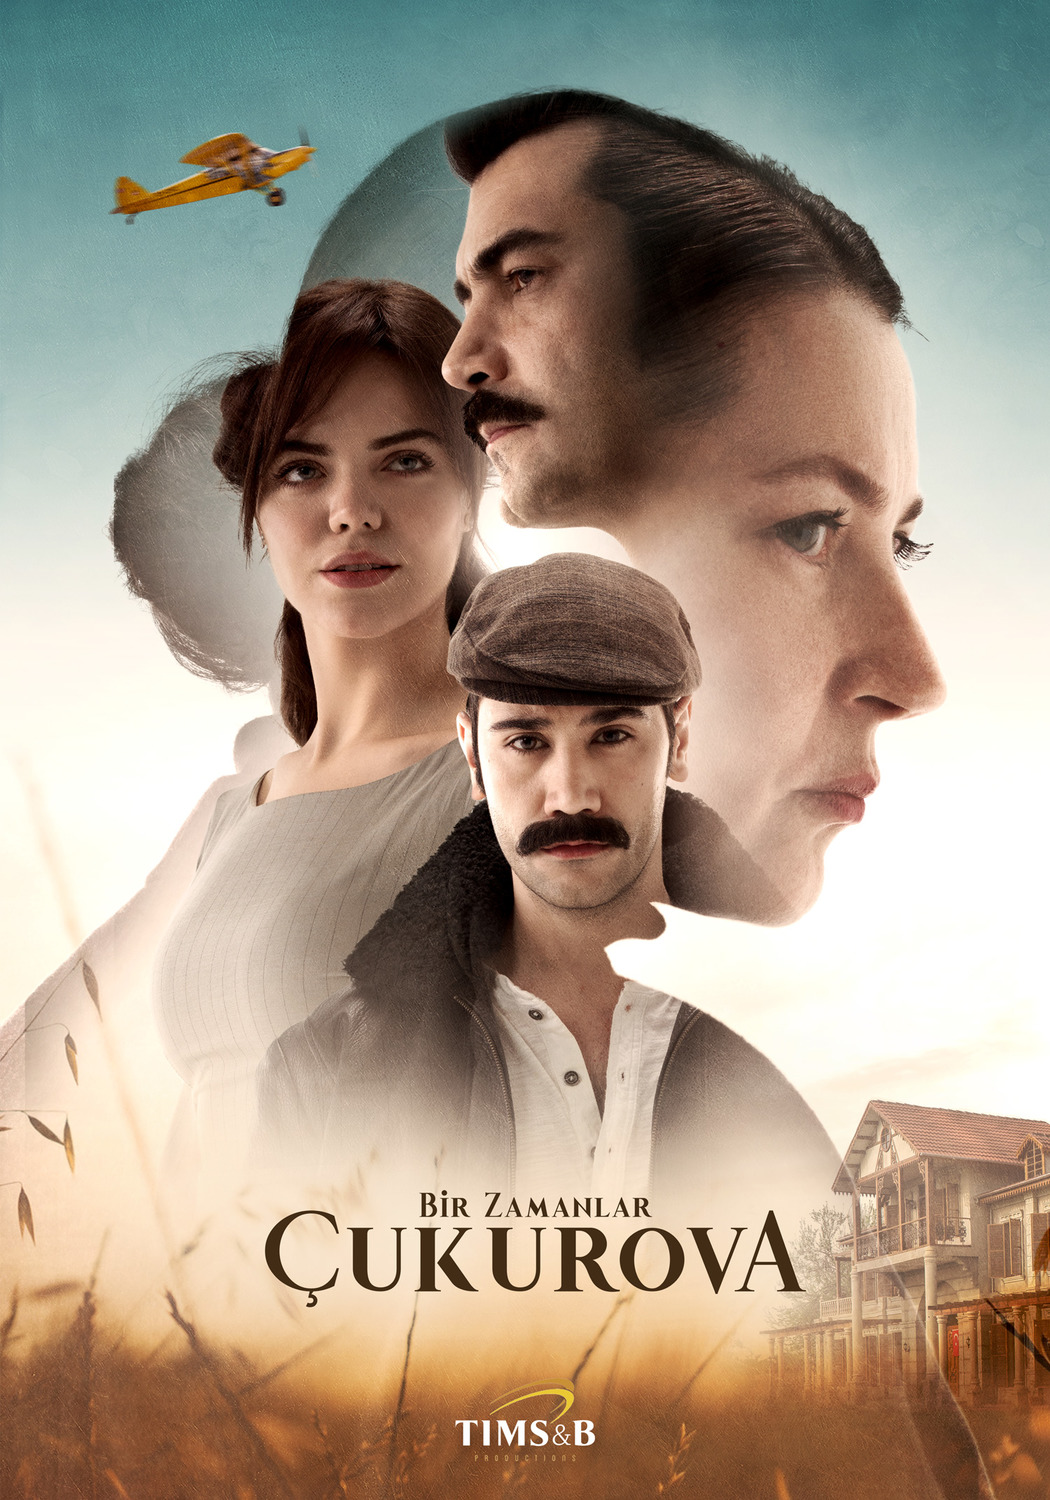 Extra Large TV Poster Image for Bir zamanlar Çukurova (#8 of 12)